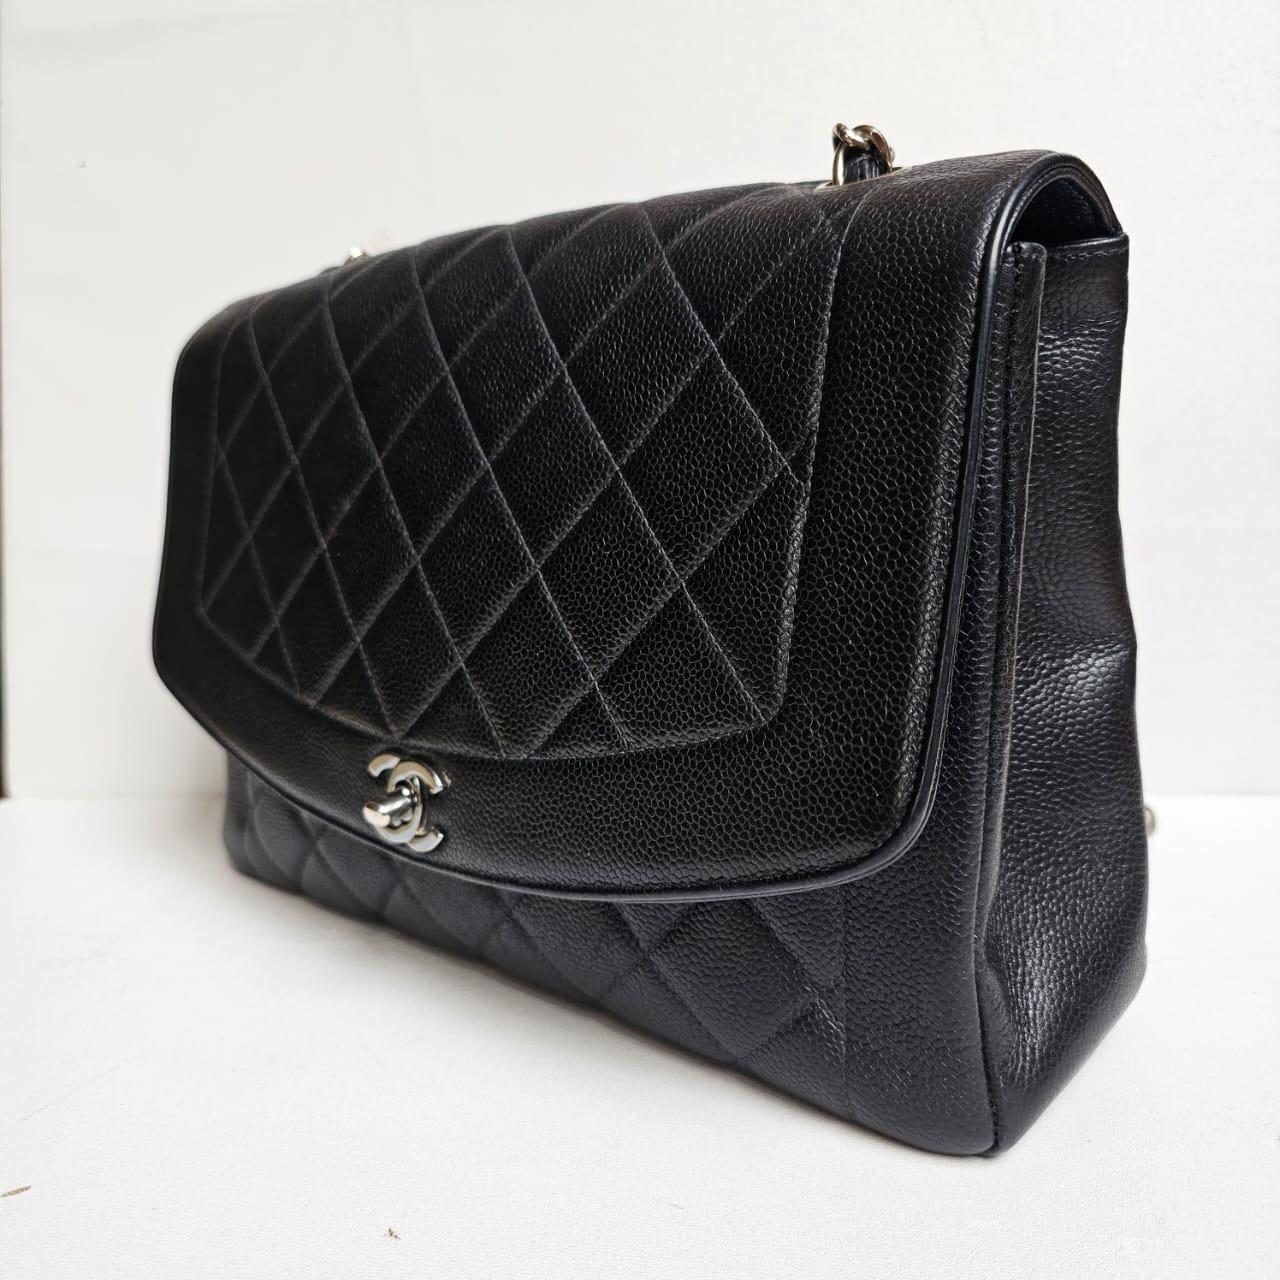 Rare Vintage 1990s Chanel Black Caviar Jumbo Diana Flap Bag For Sale 2